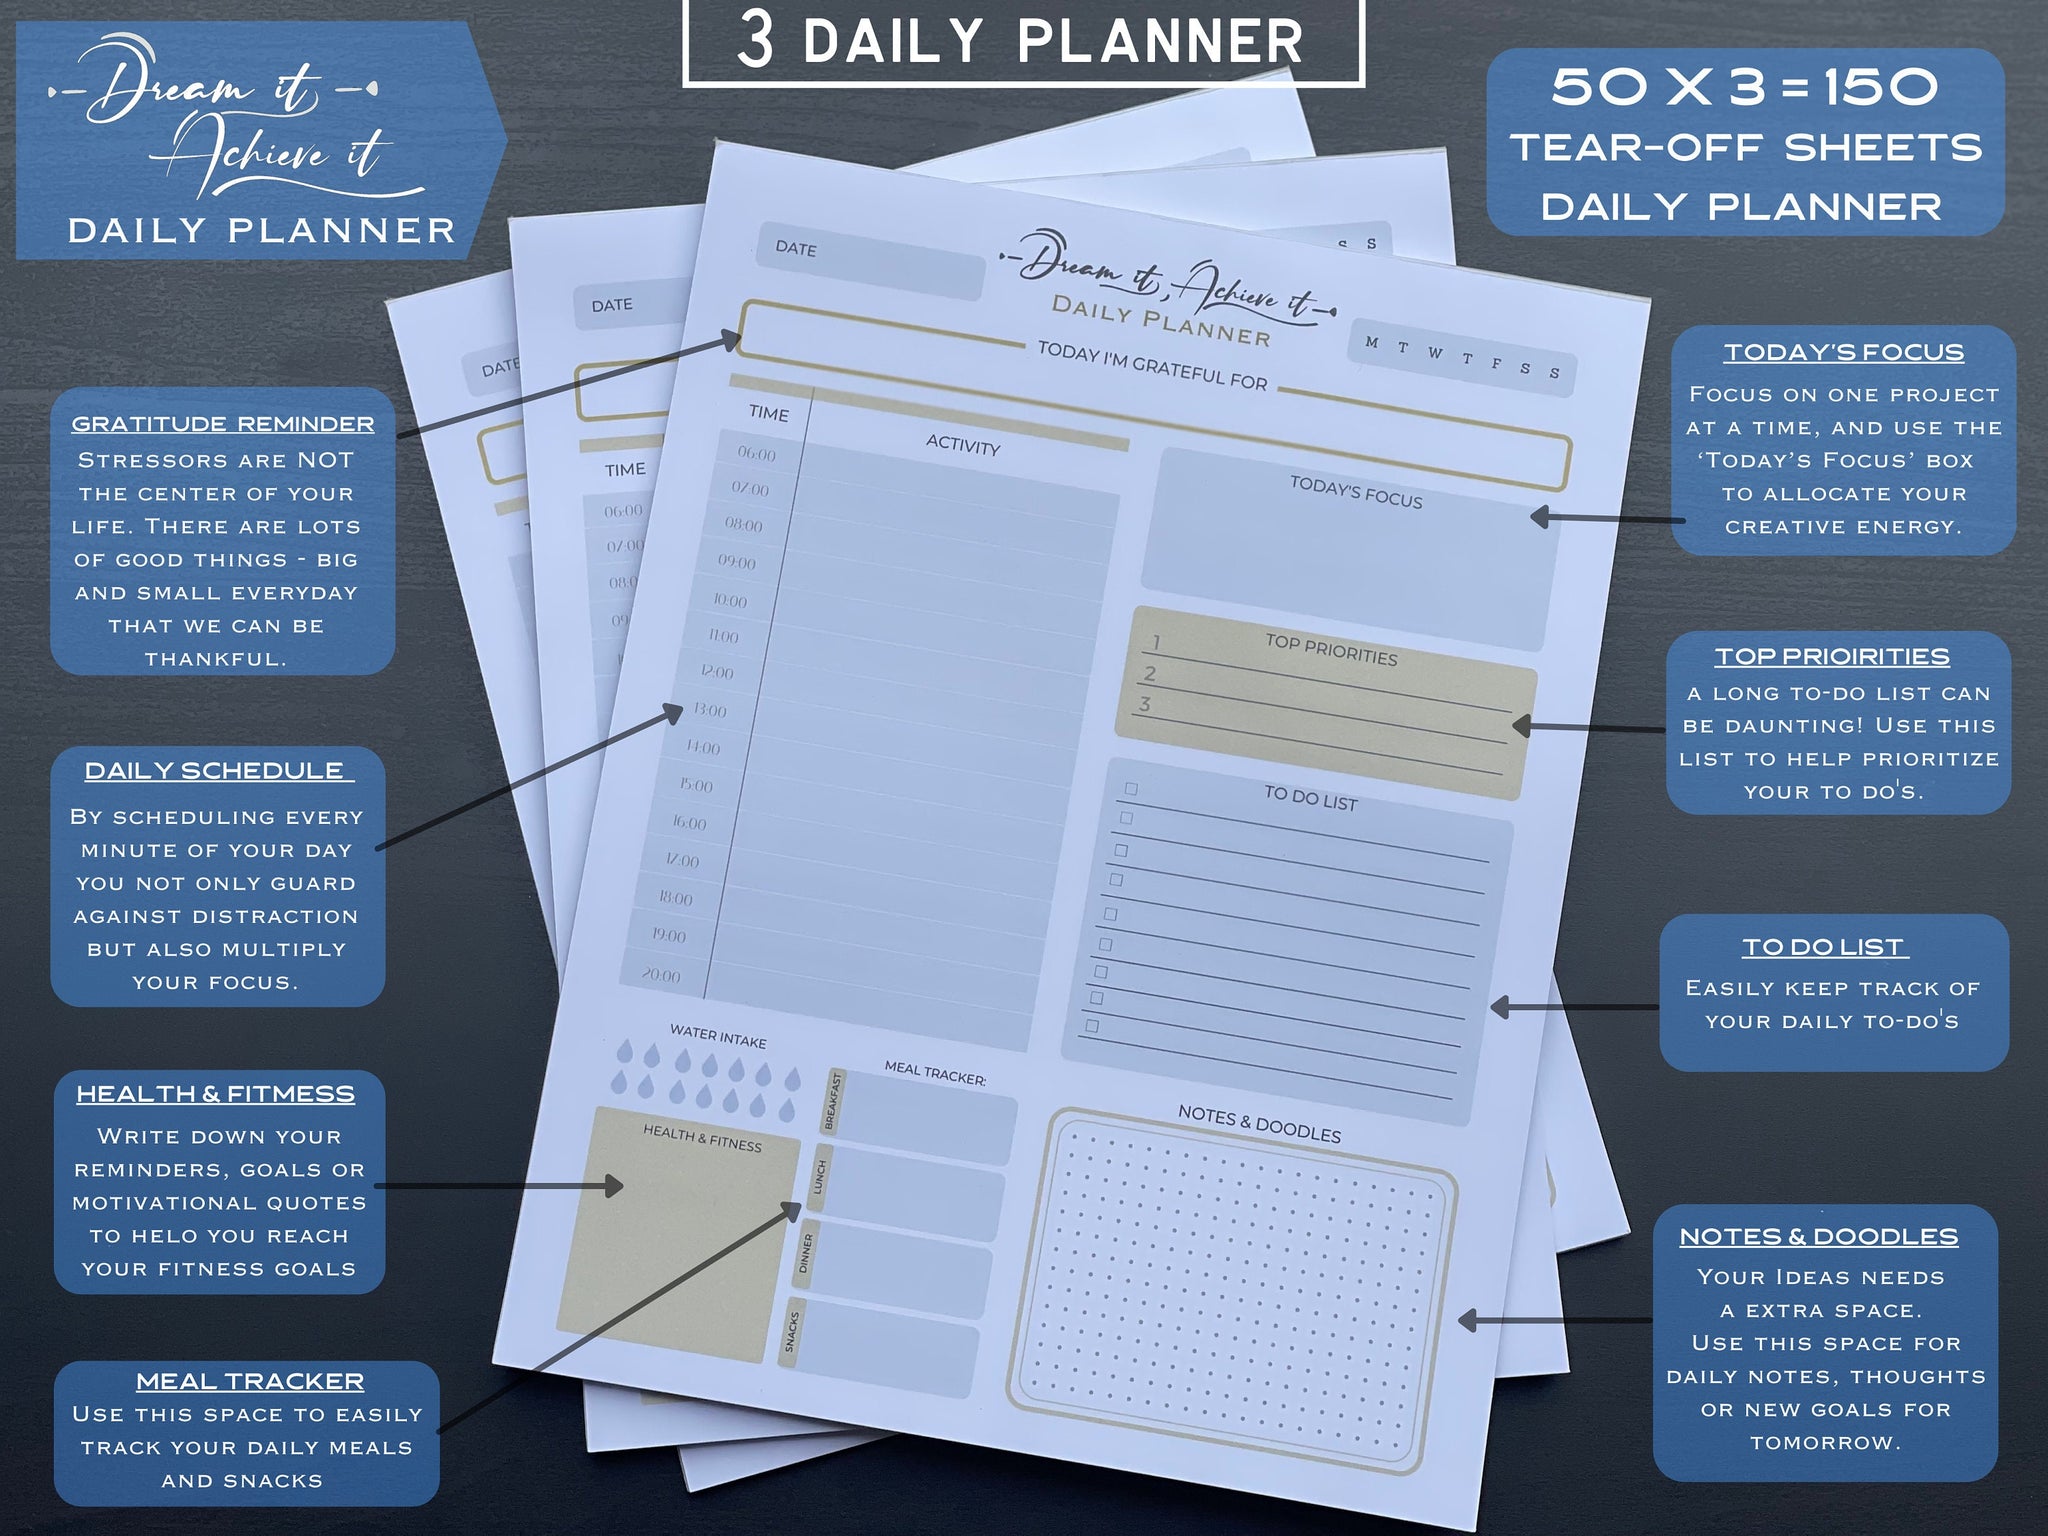 Business Gift Set, Dream lt Achieve It Daily Planner + Padfolio + Pen,